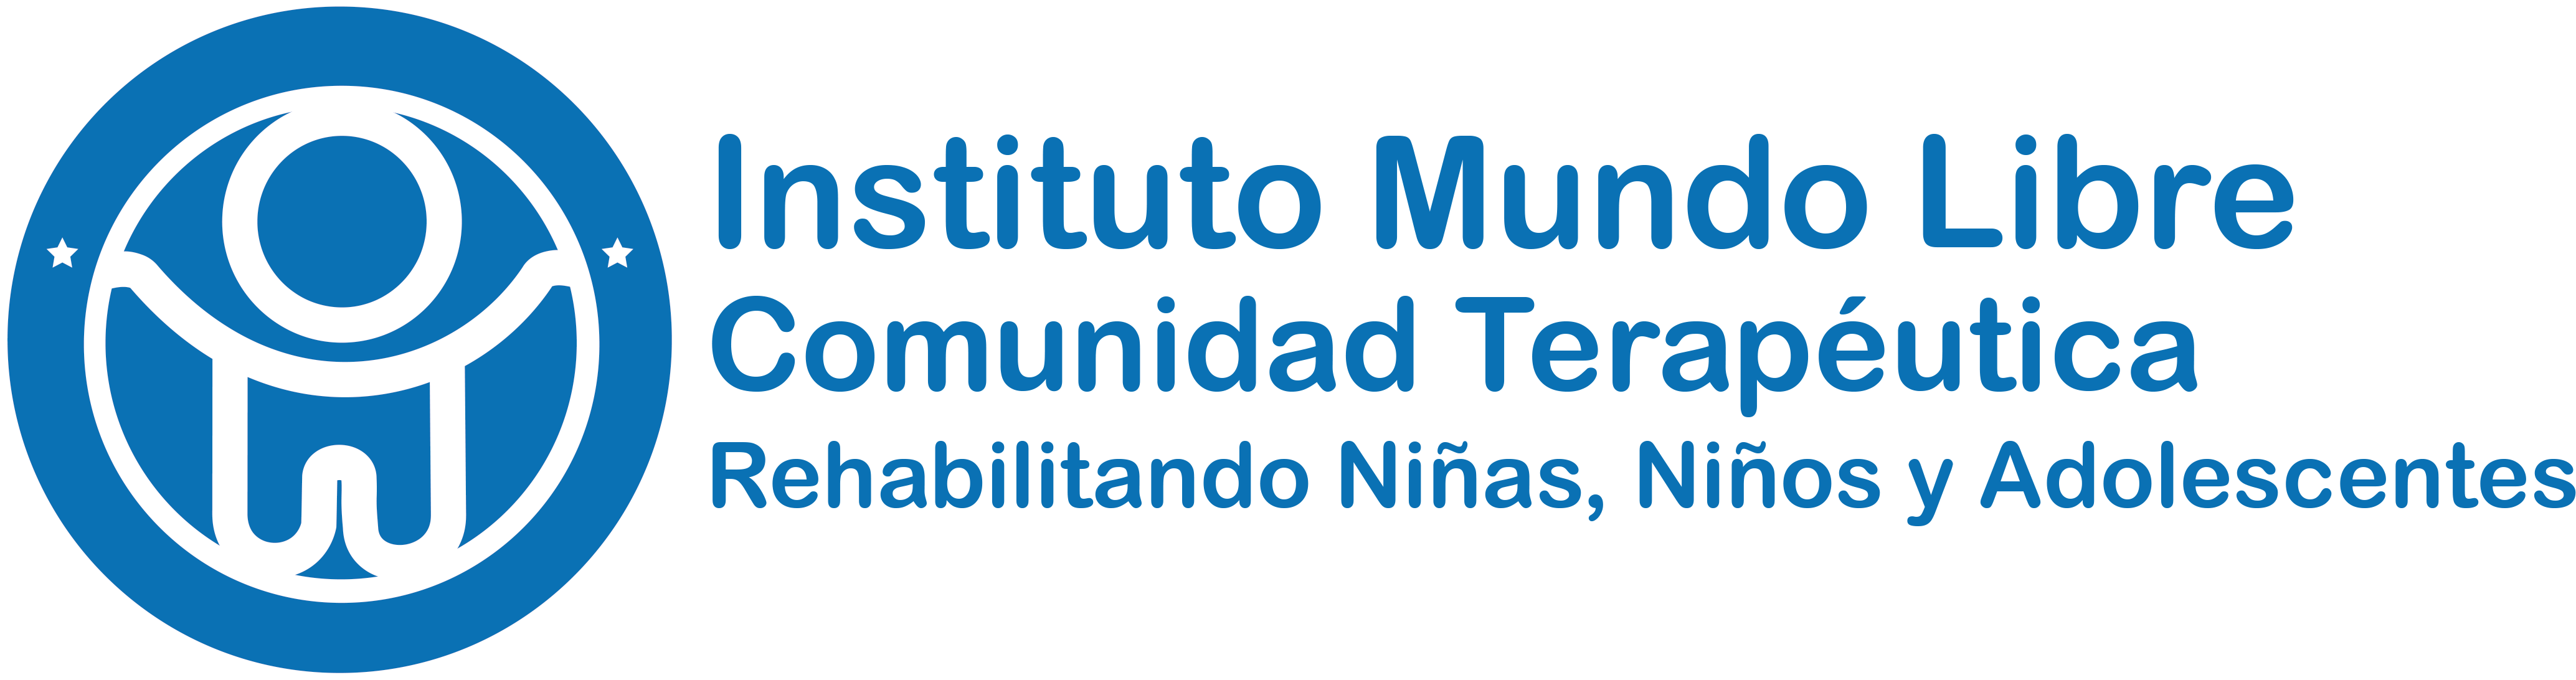 Instituto Mundo Libre logo